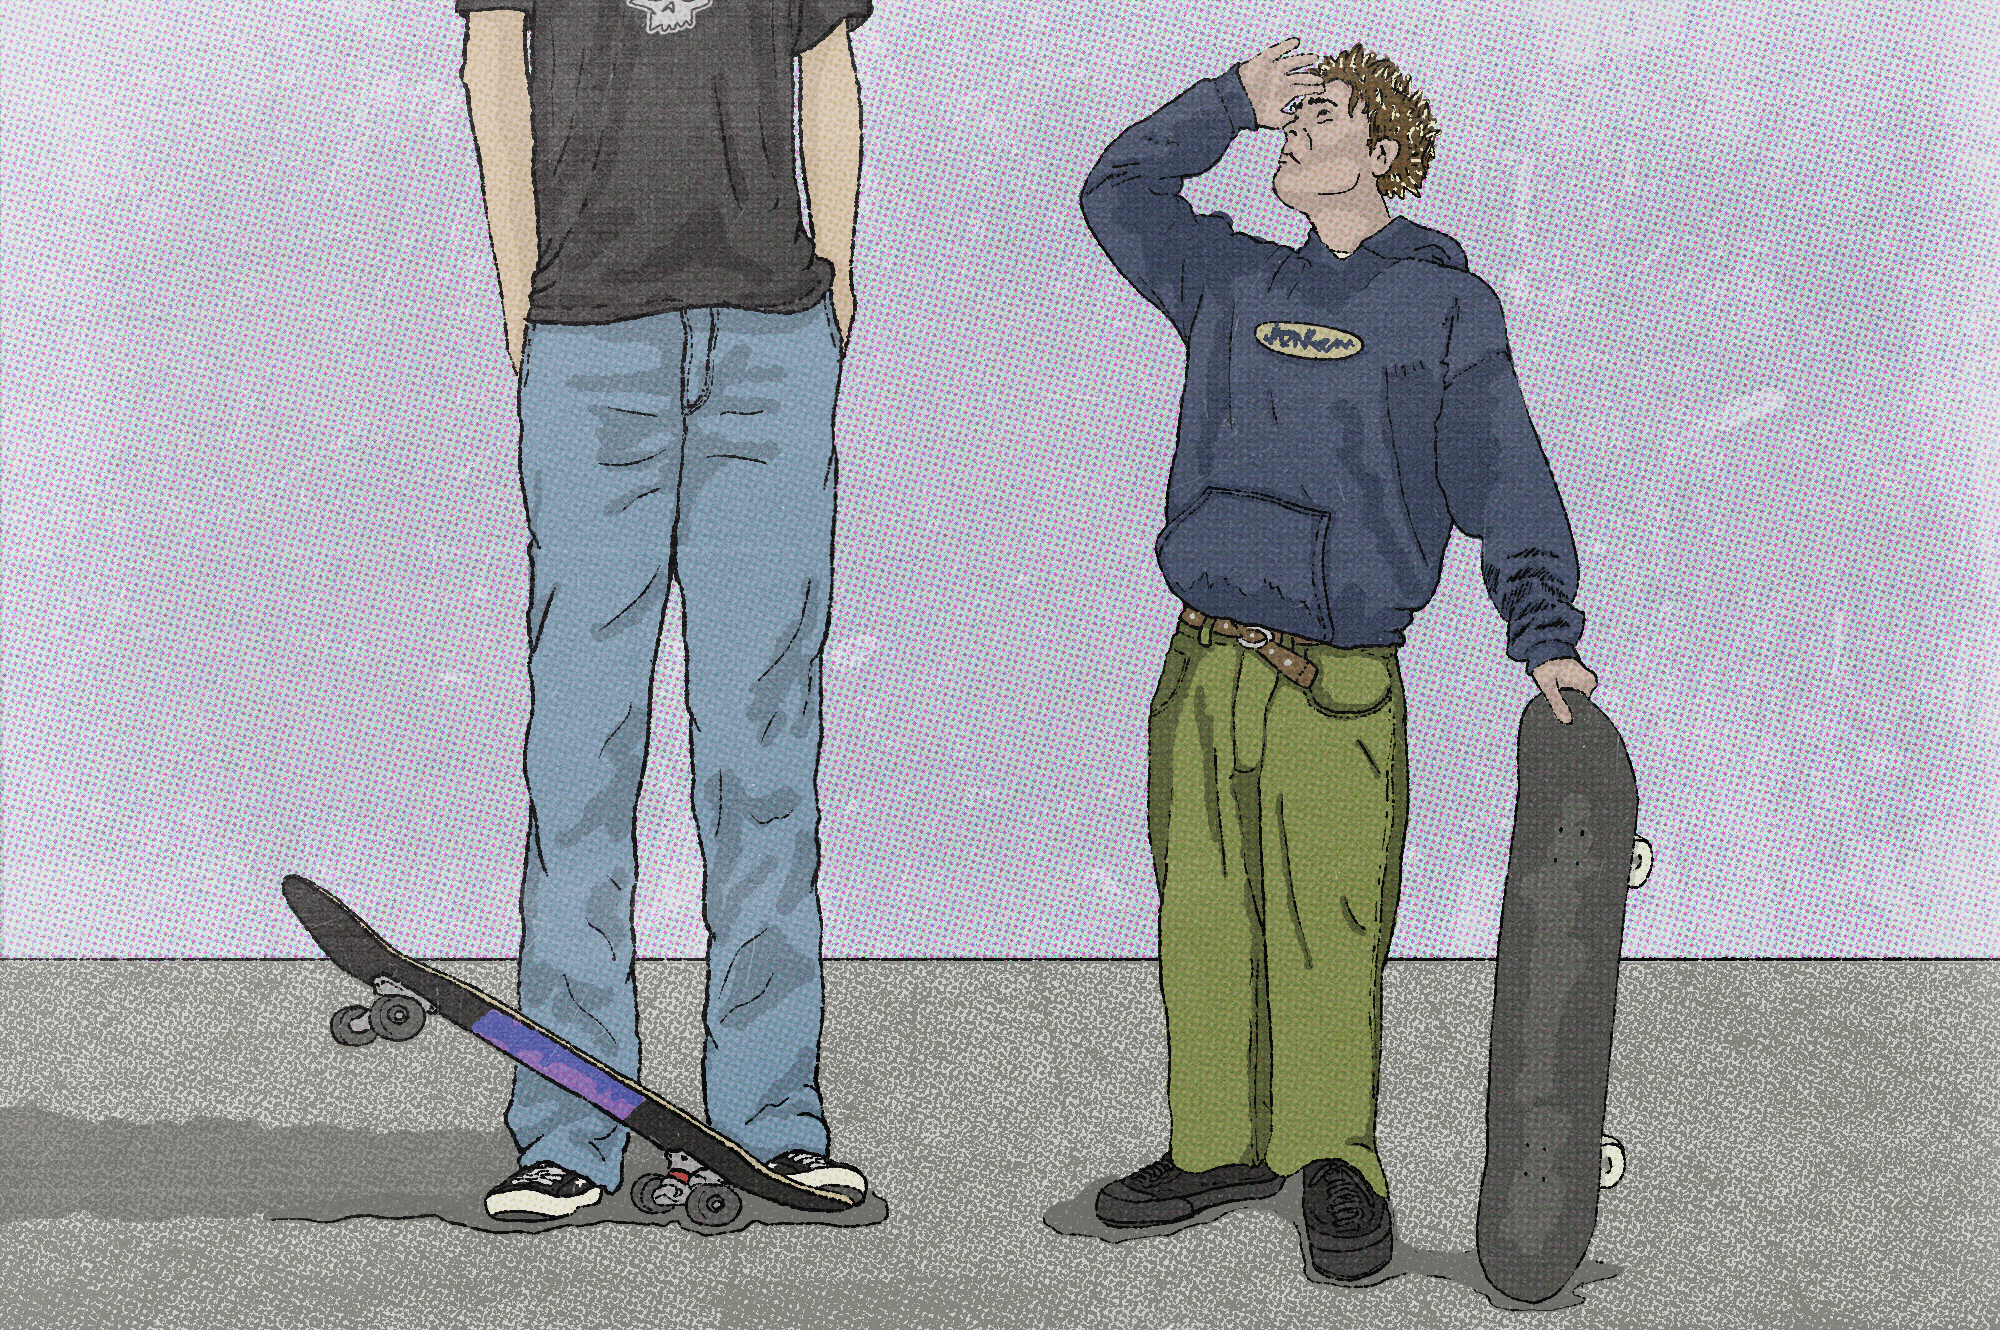 Skateboard shirt & dark green shorts – Little Jumps